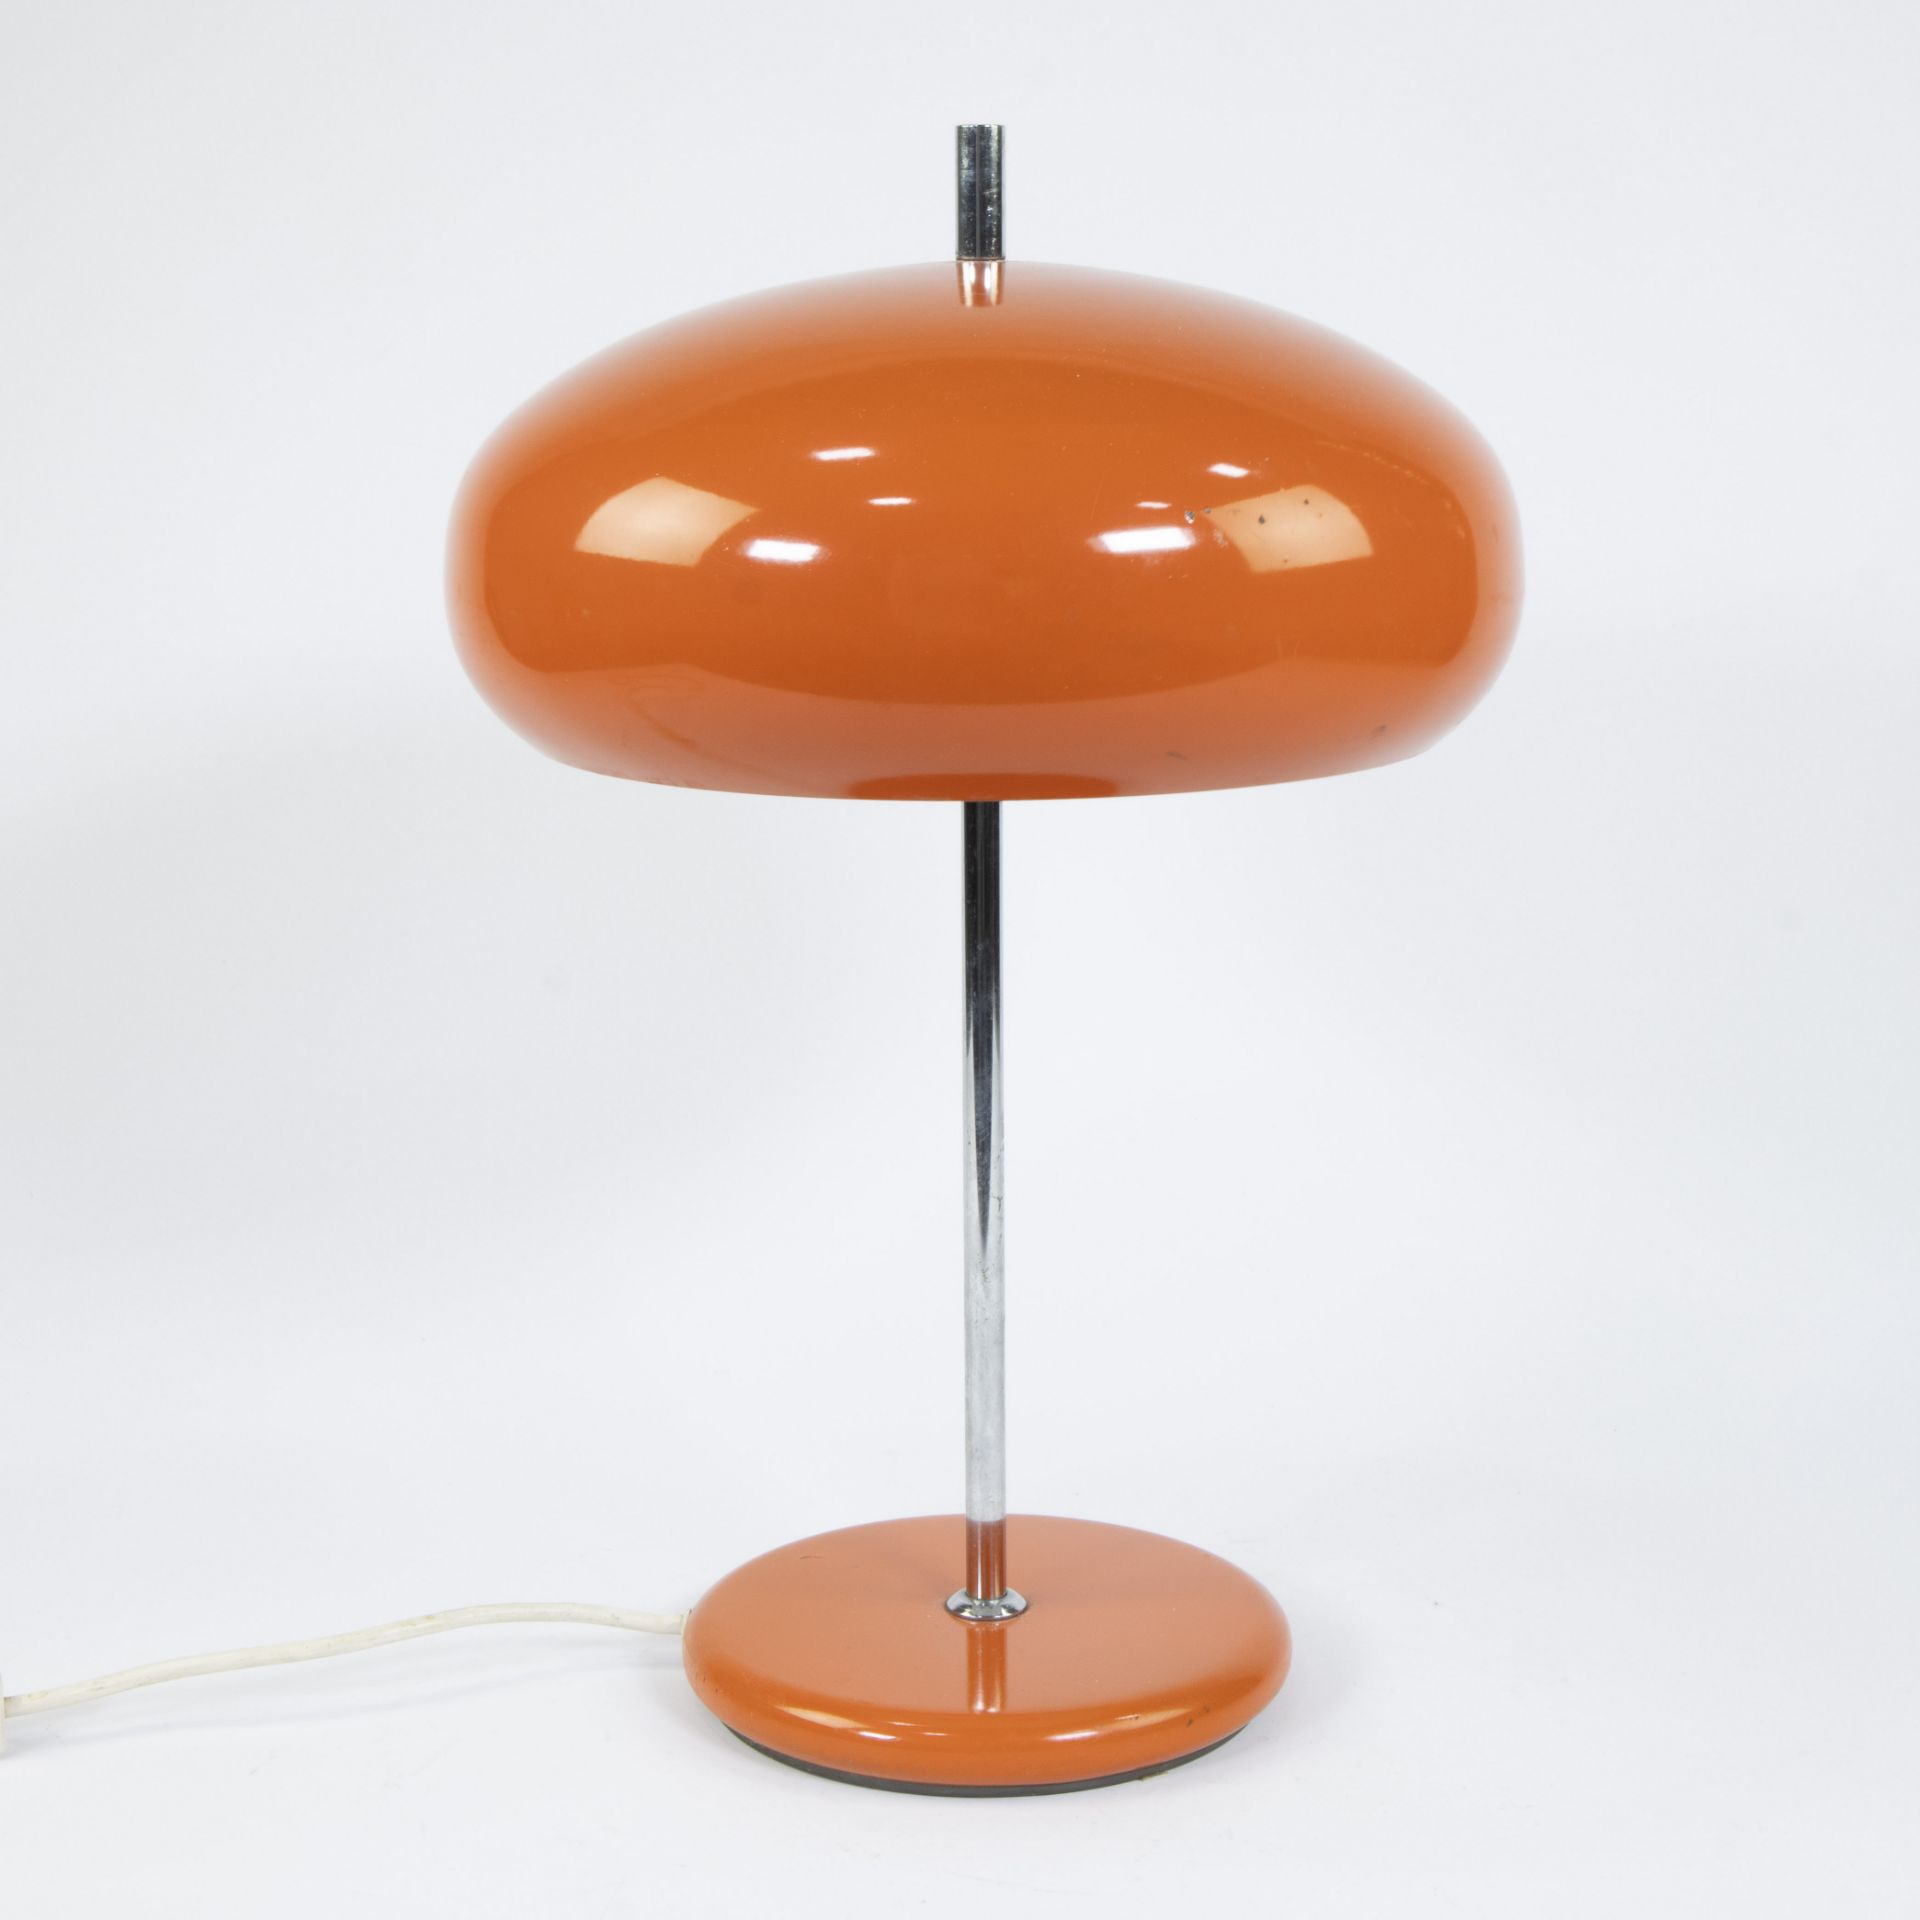 Vintage orange mushroom lamp from the 1970s - Image 4 of 4